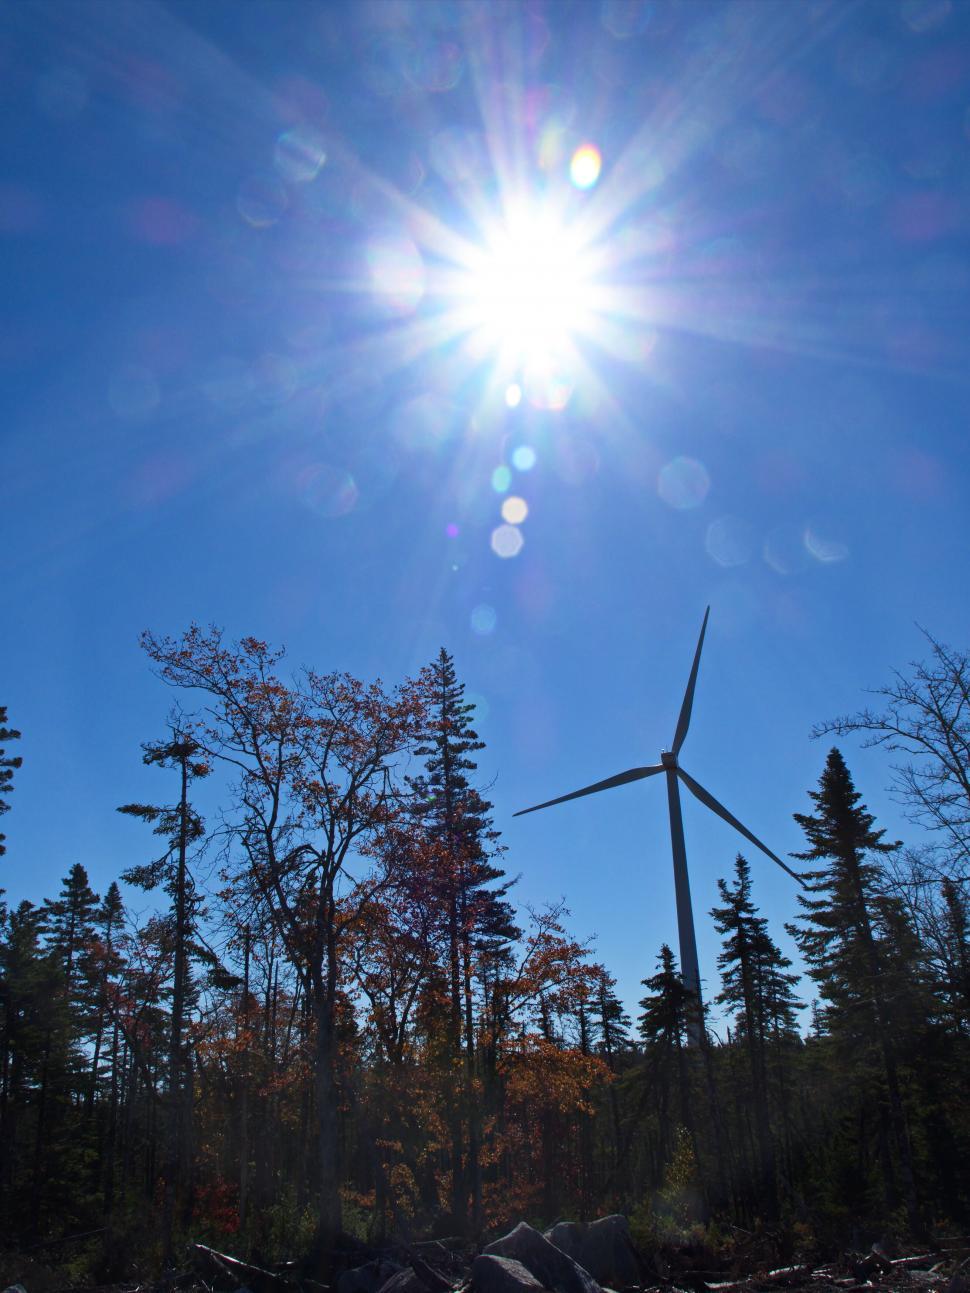 Free Image of Renewable energy wind turbine under sunny sky 